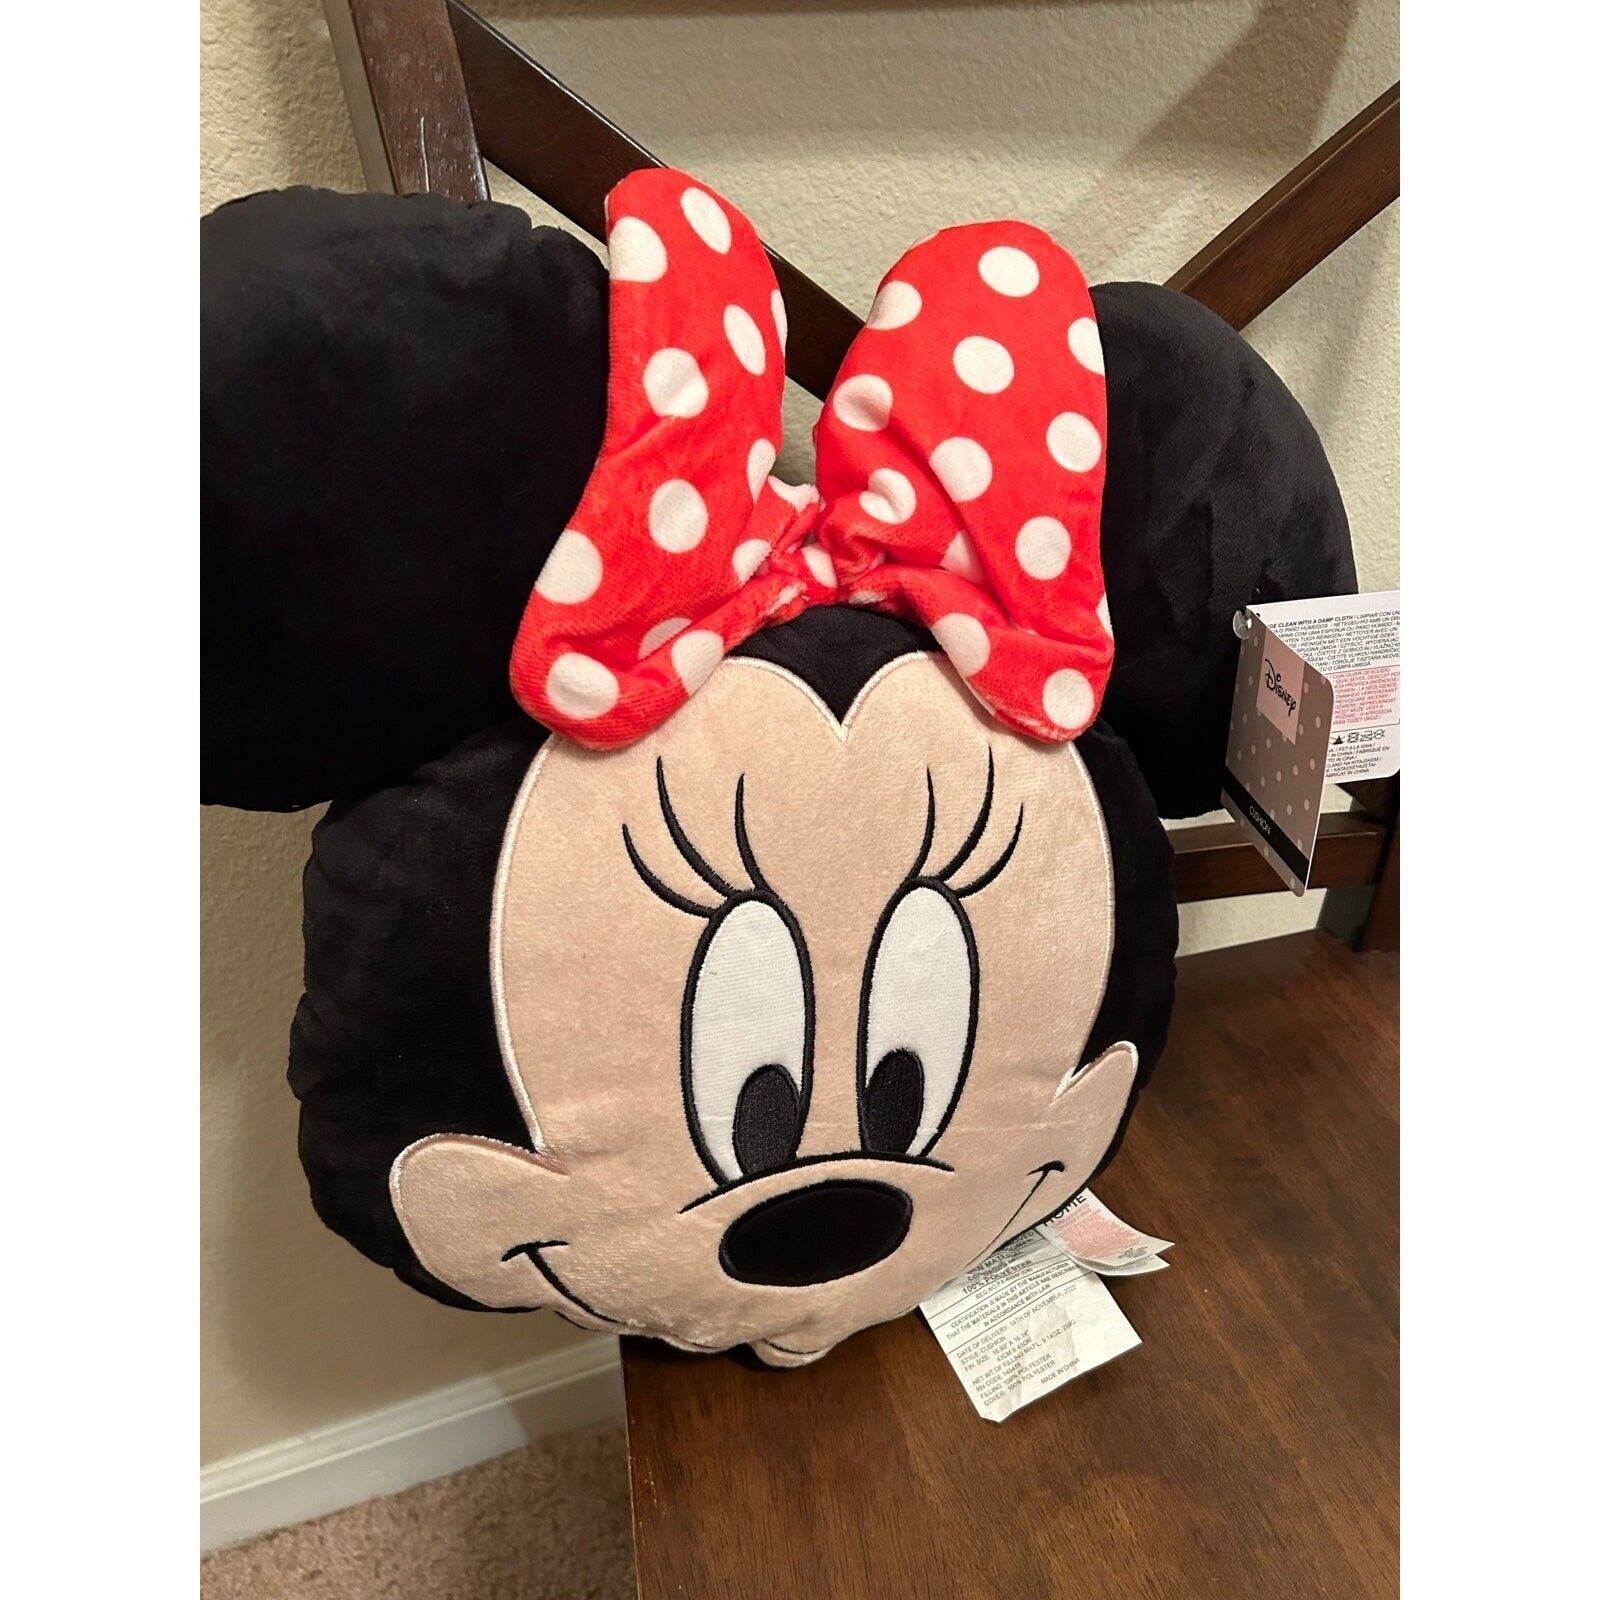 New Disney 17x16 Minnie Mouse pillow